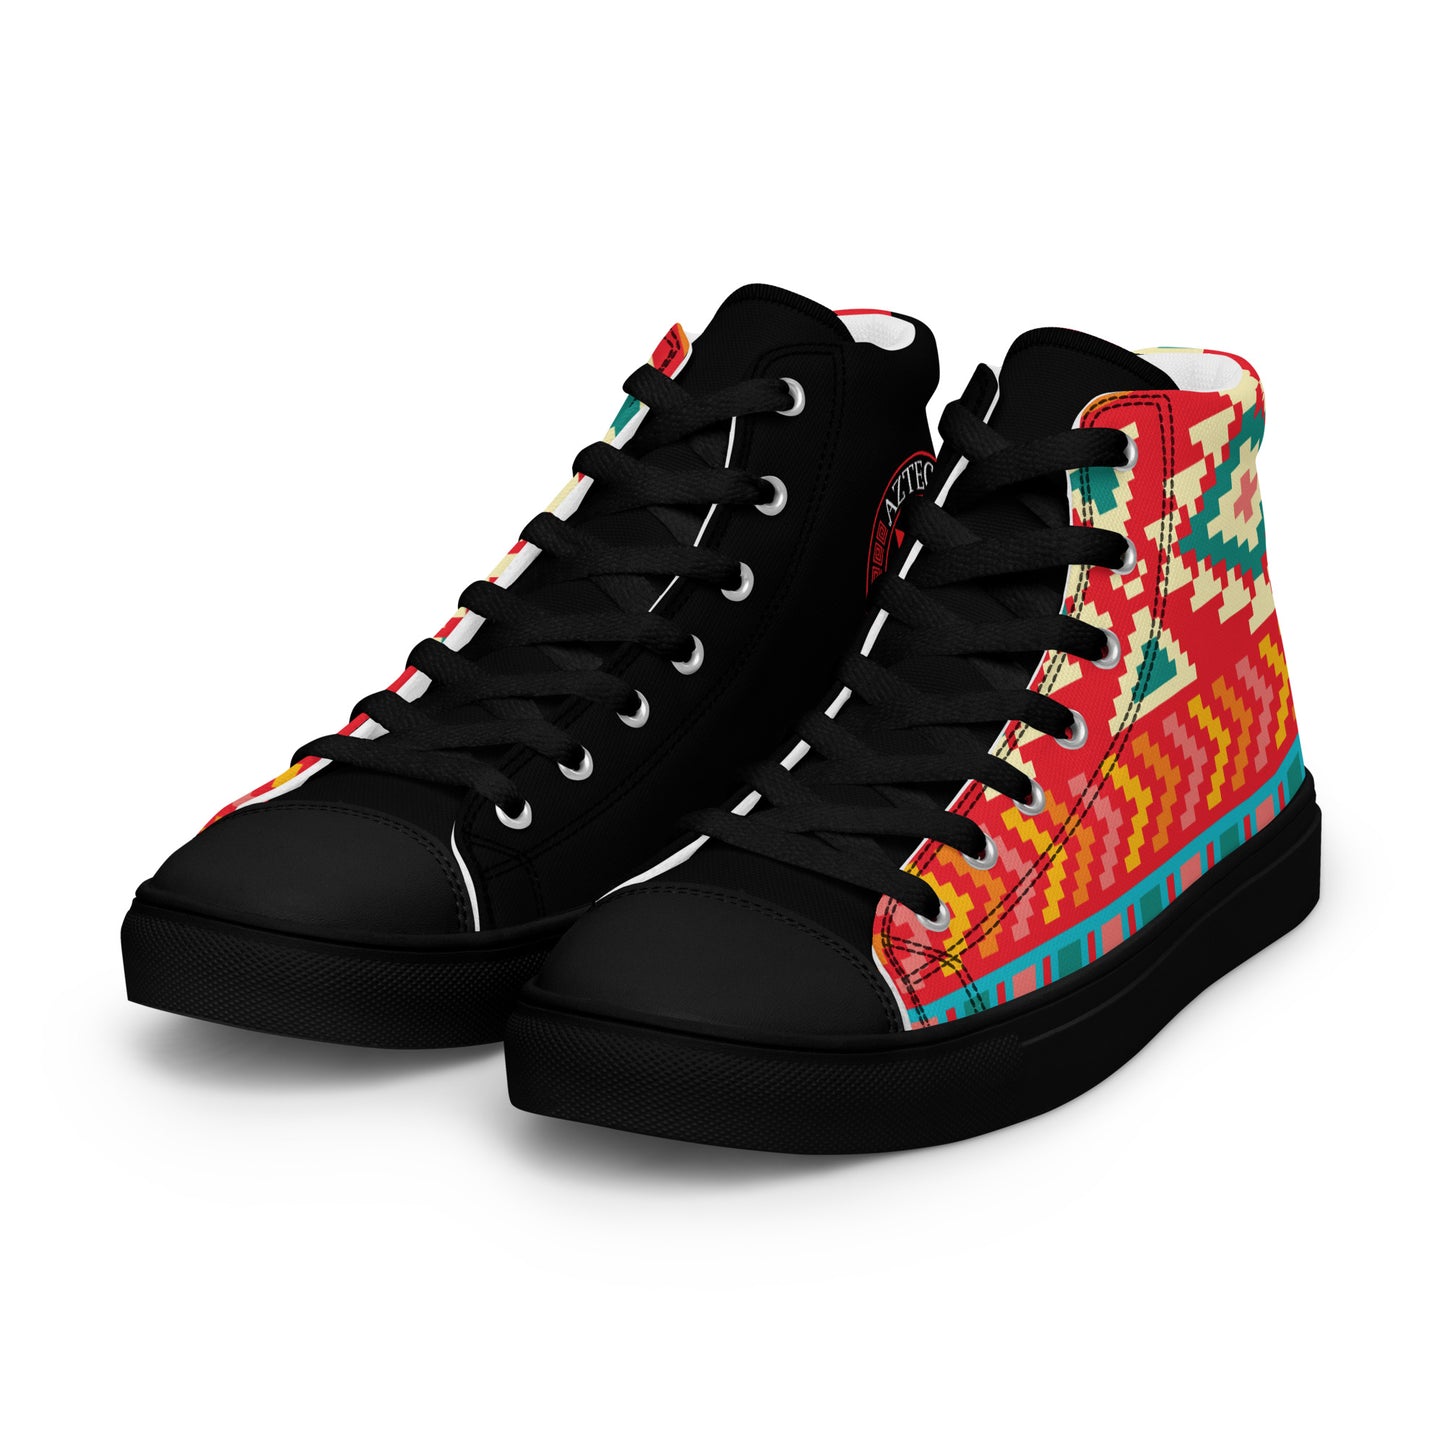 Diseño Nuscaa - Men - Black - High top shoes